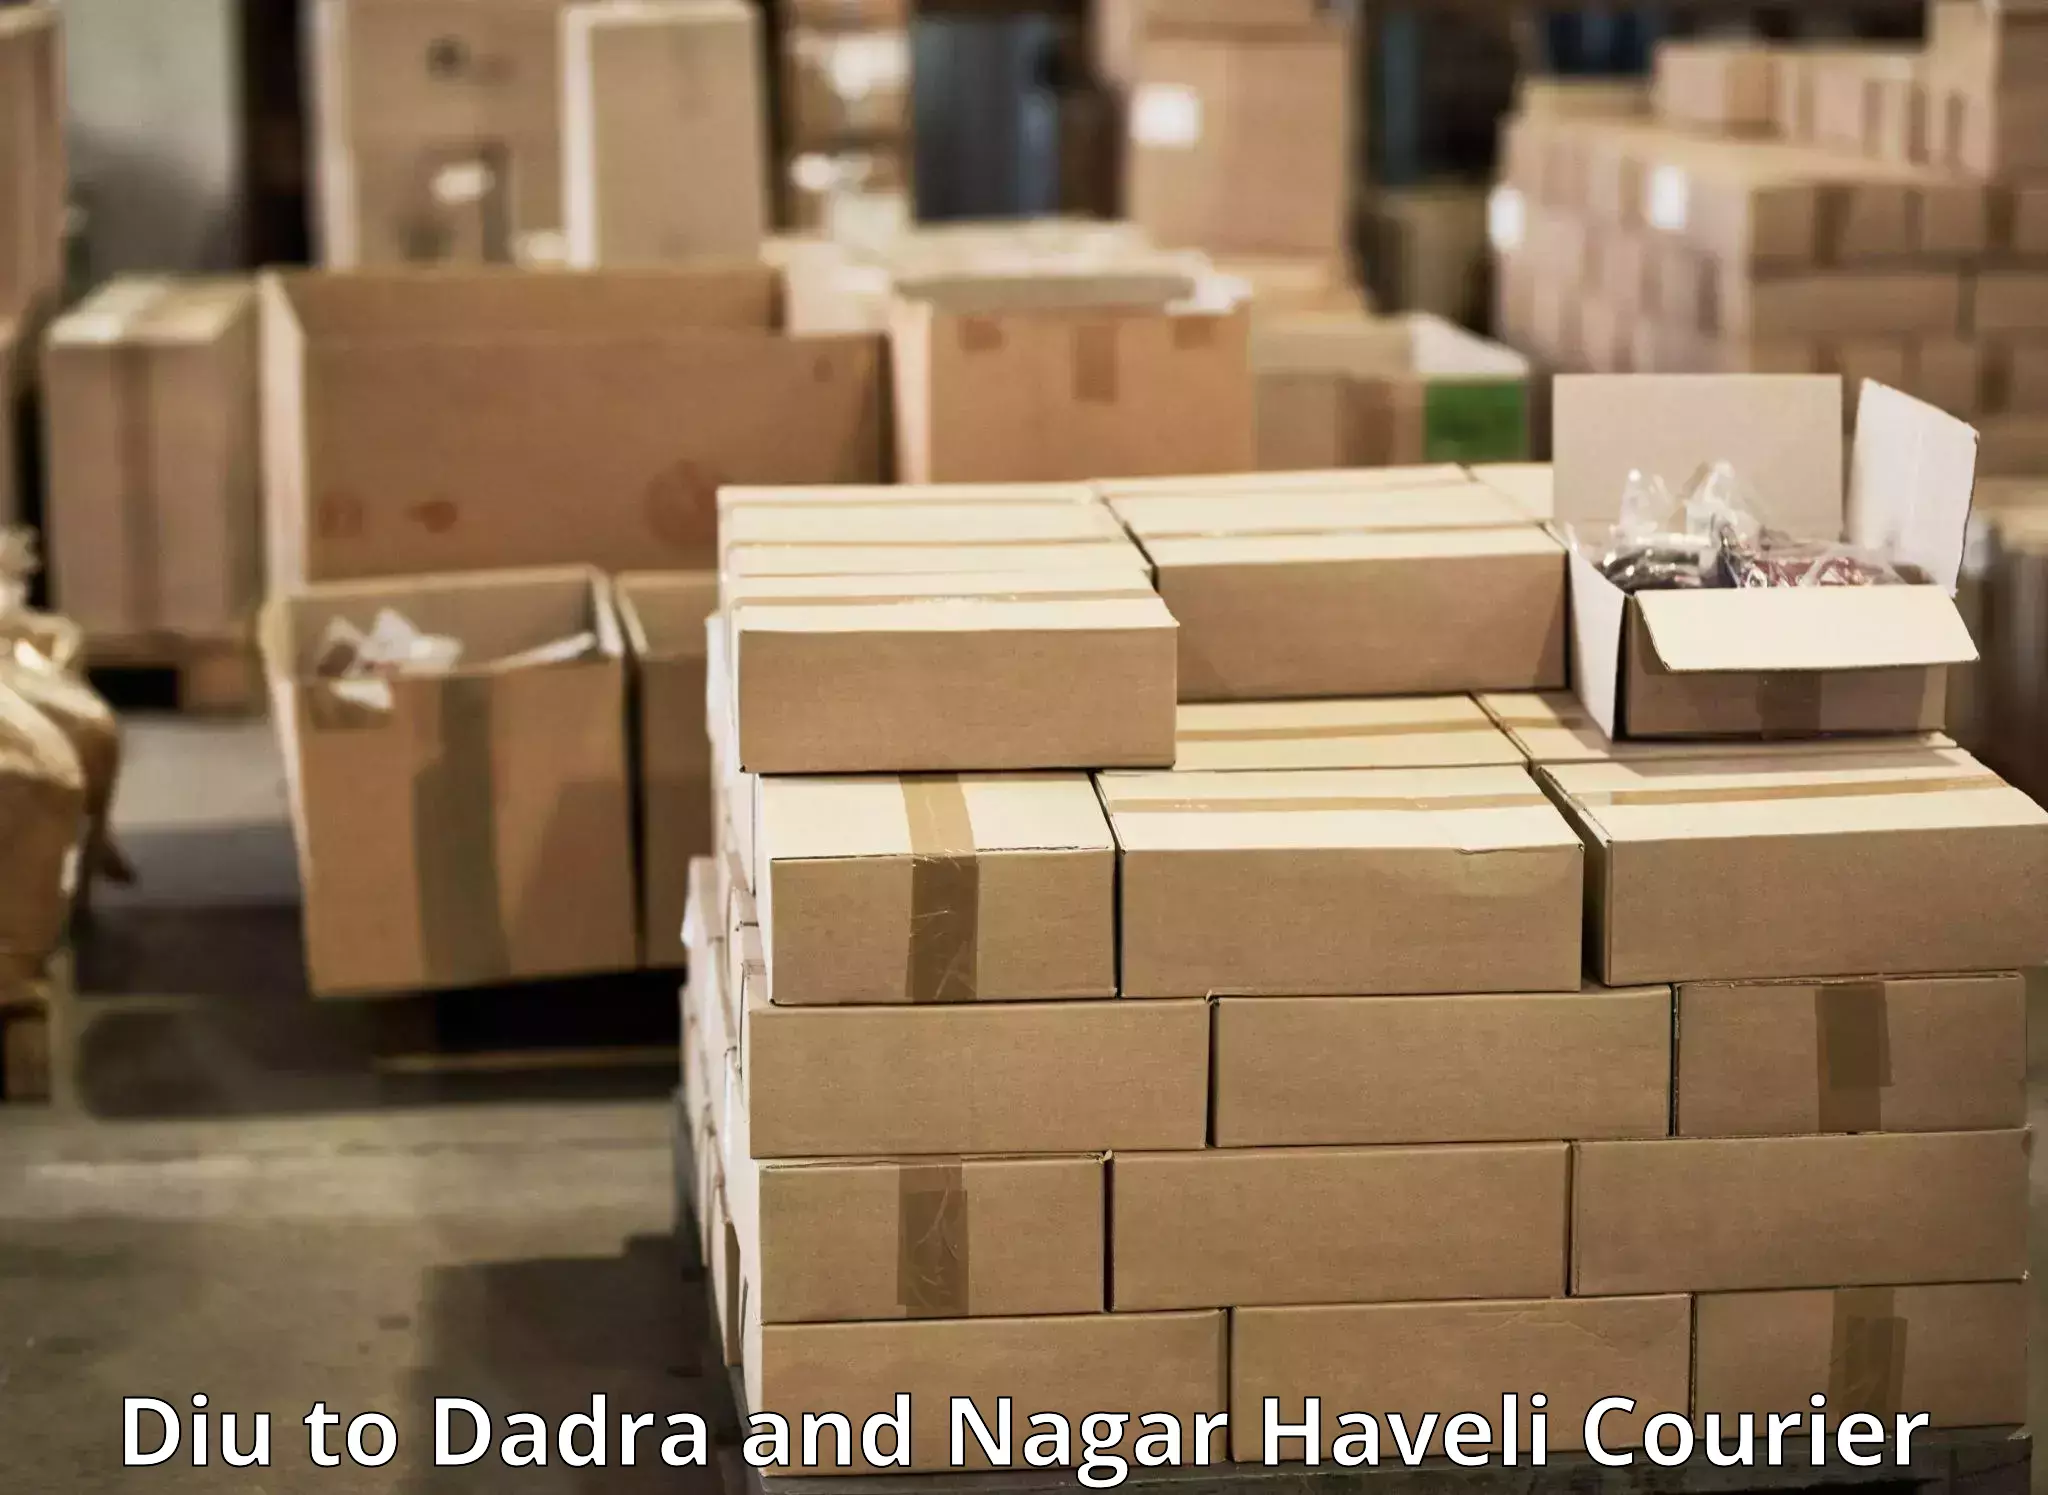 Bulk shipment in Diu to Dadra and Nagar Haveli